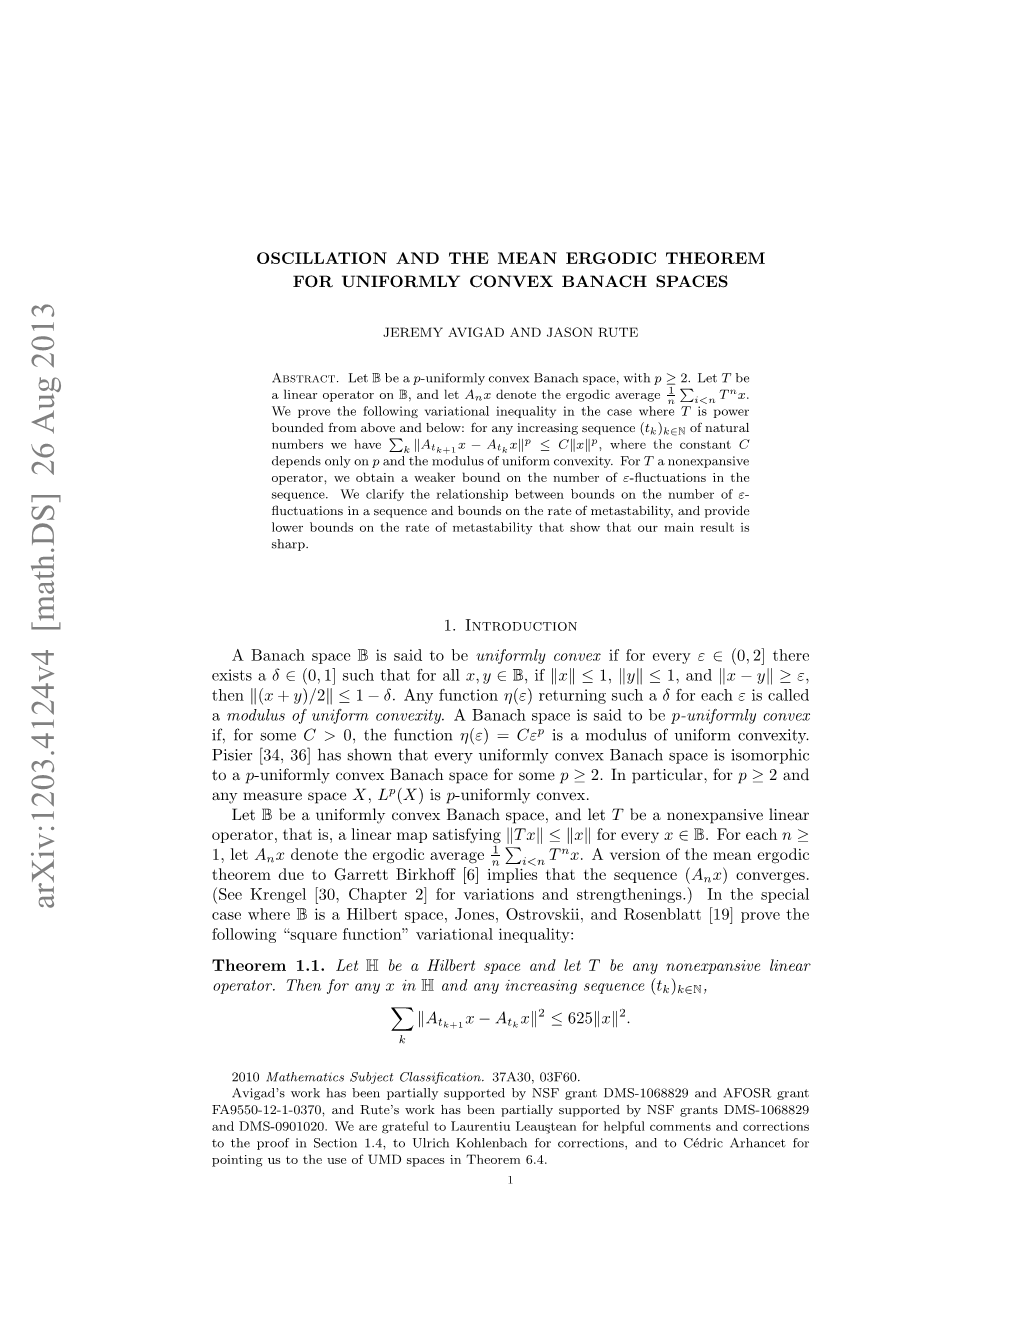 Oscillation and the Mean Ergodic Theorem for Uniformly Convex